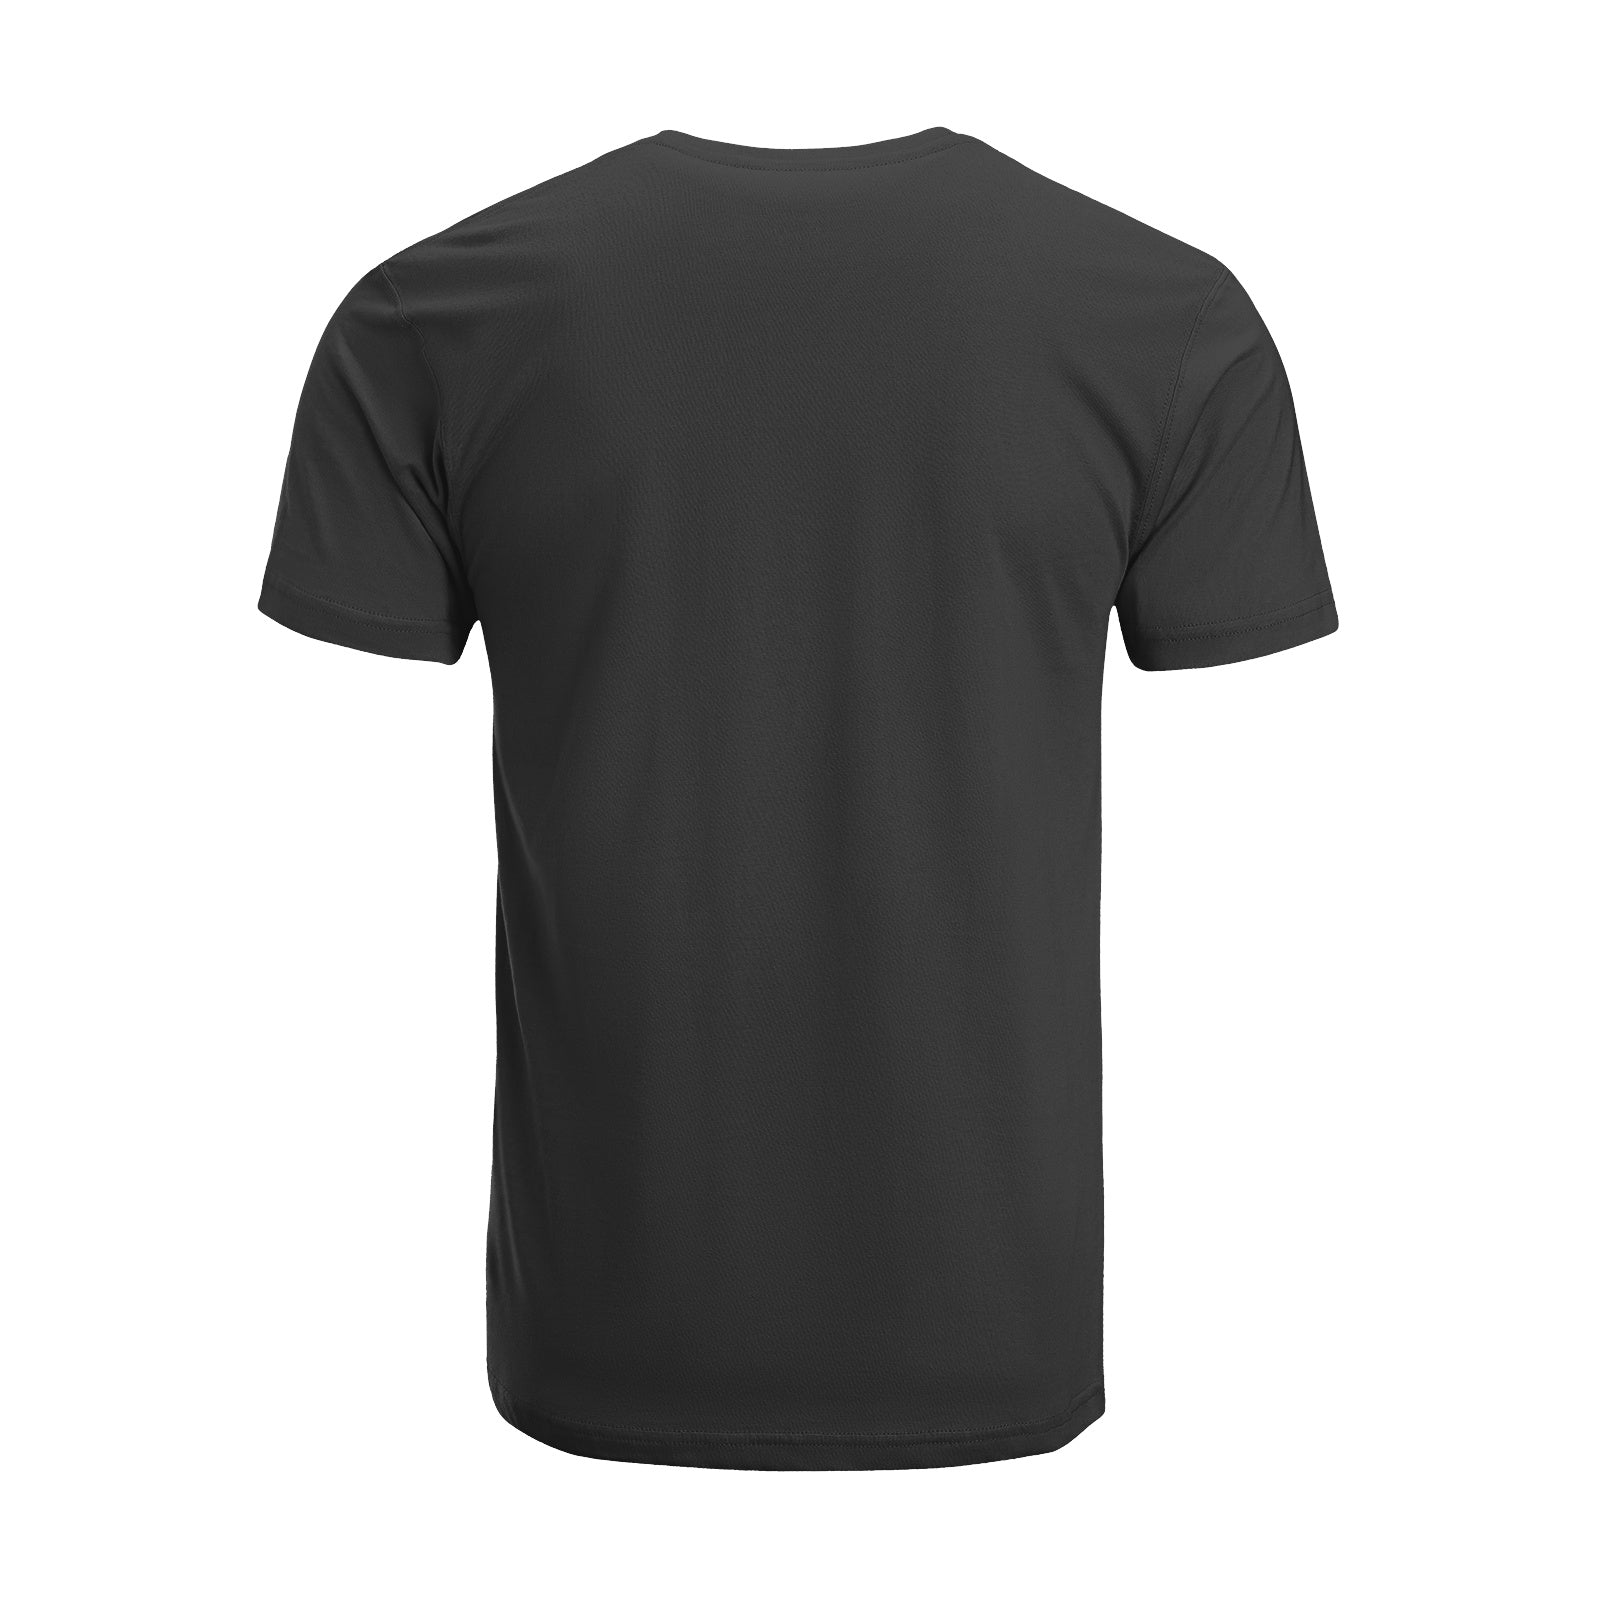 Unisex Short Sleeve Crew Neck Cotton Jersey T-Shirt CAT 10 - Tara-Outfits.com